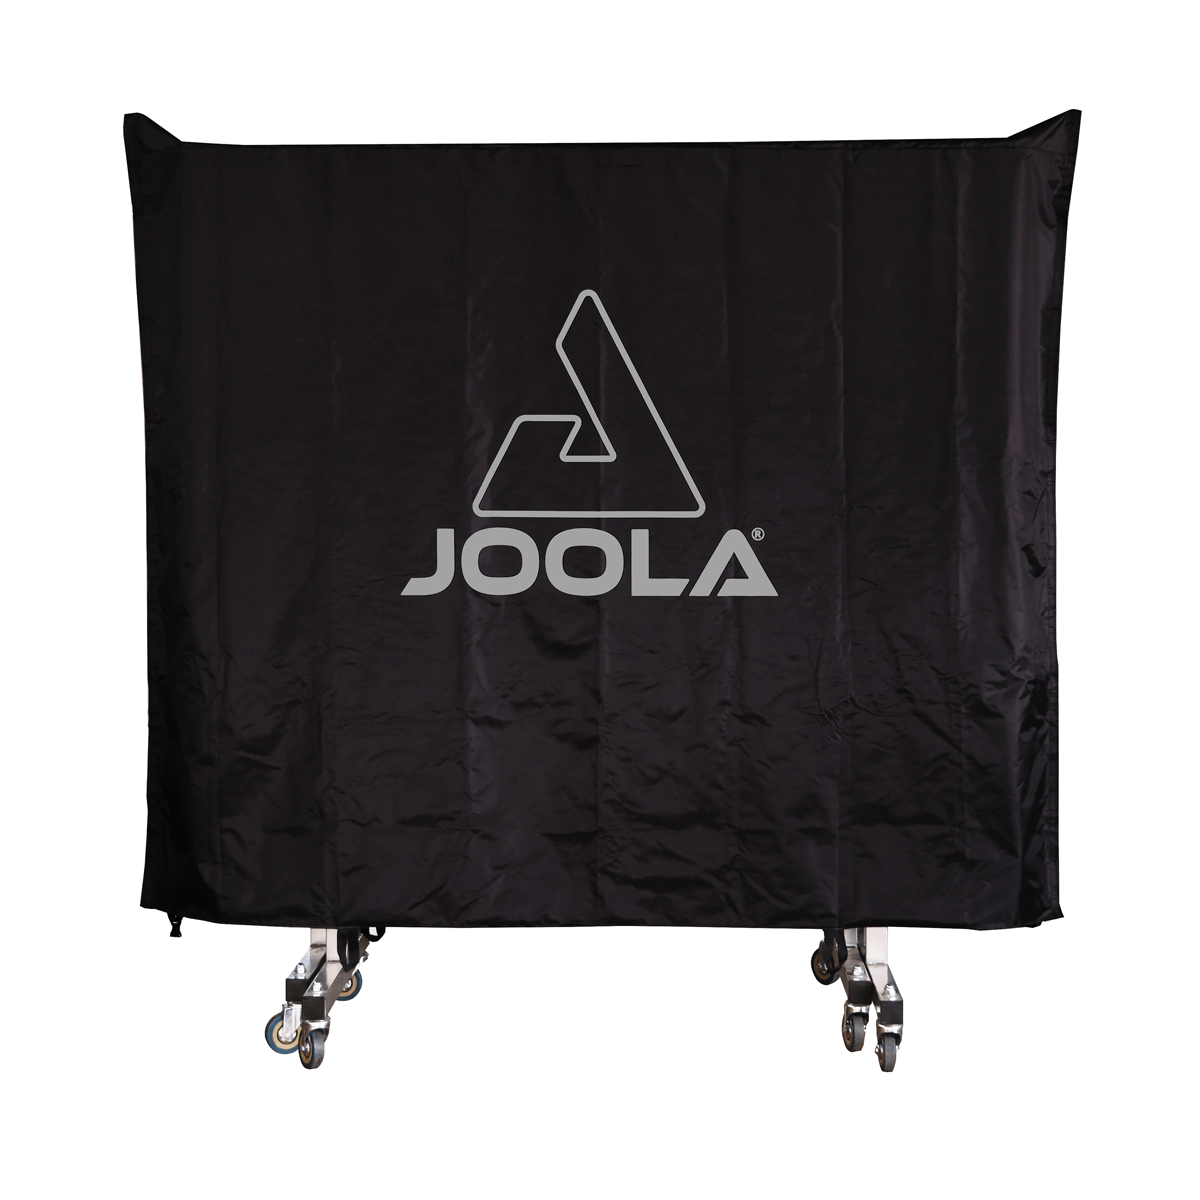 JOOLA All-Weather Table JOOLA Cover USA 